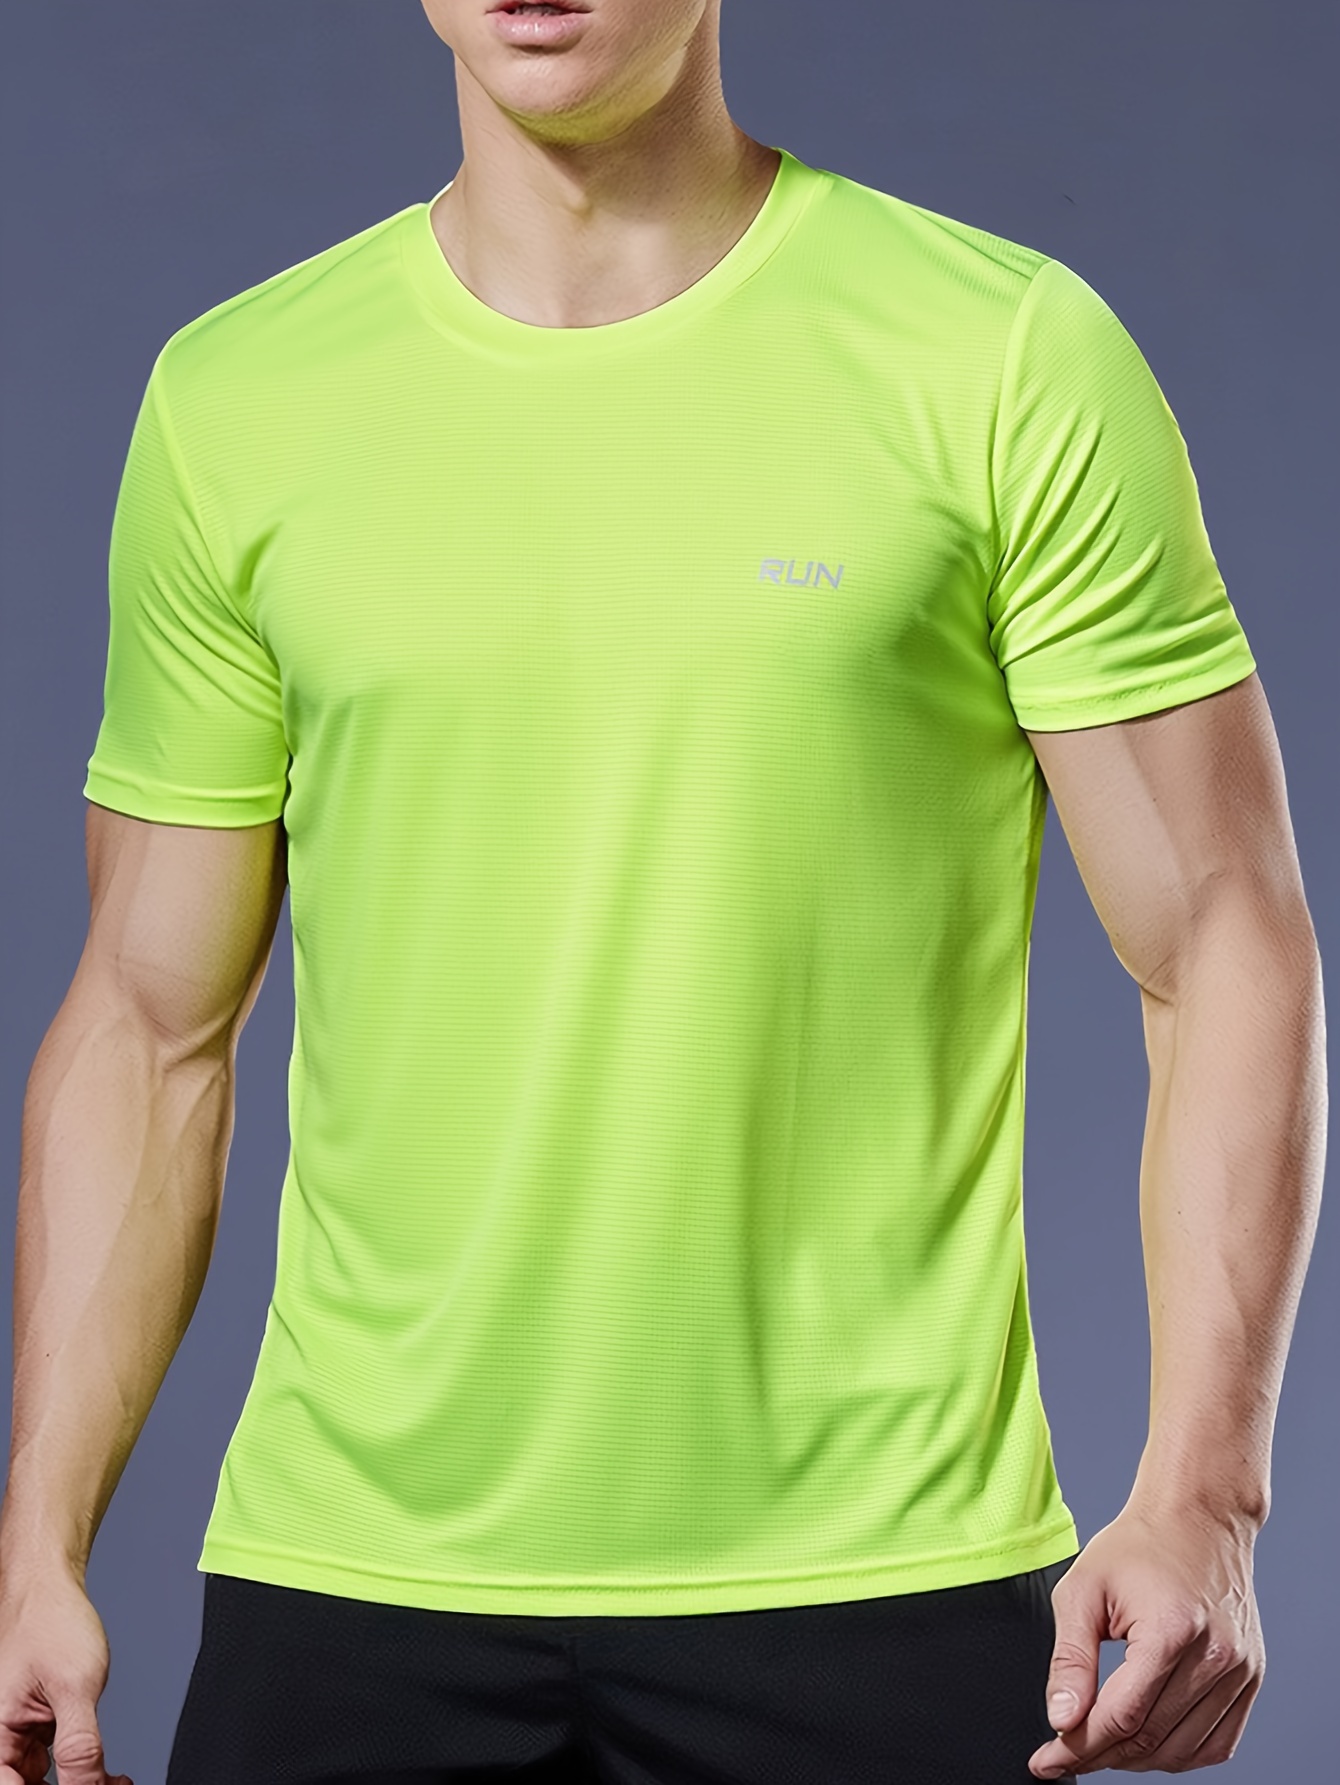 Tshirt Fitness Homme - Teeshirt manches courtes vert - Vêtements